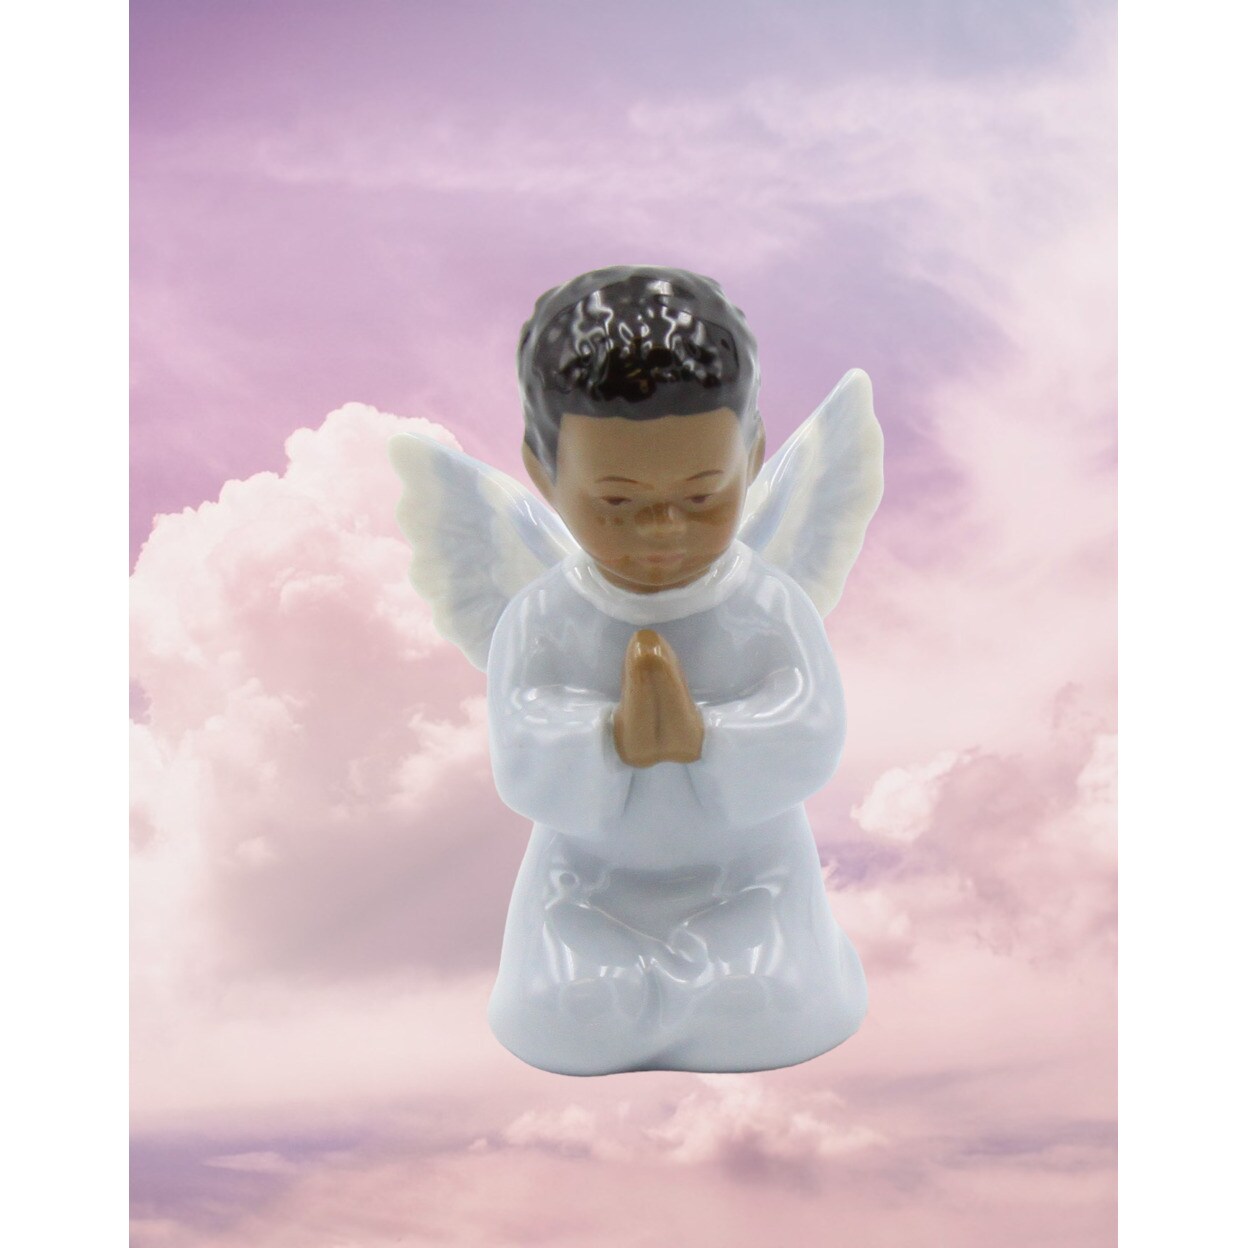 kevinsgiftshoppe Ceramic African American Praying Angel Boy Figurine Home Decor Religious Decor Religious Gift Church Decor